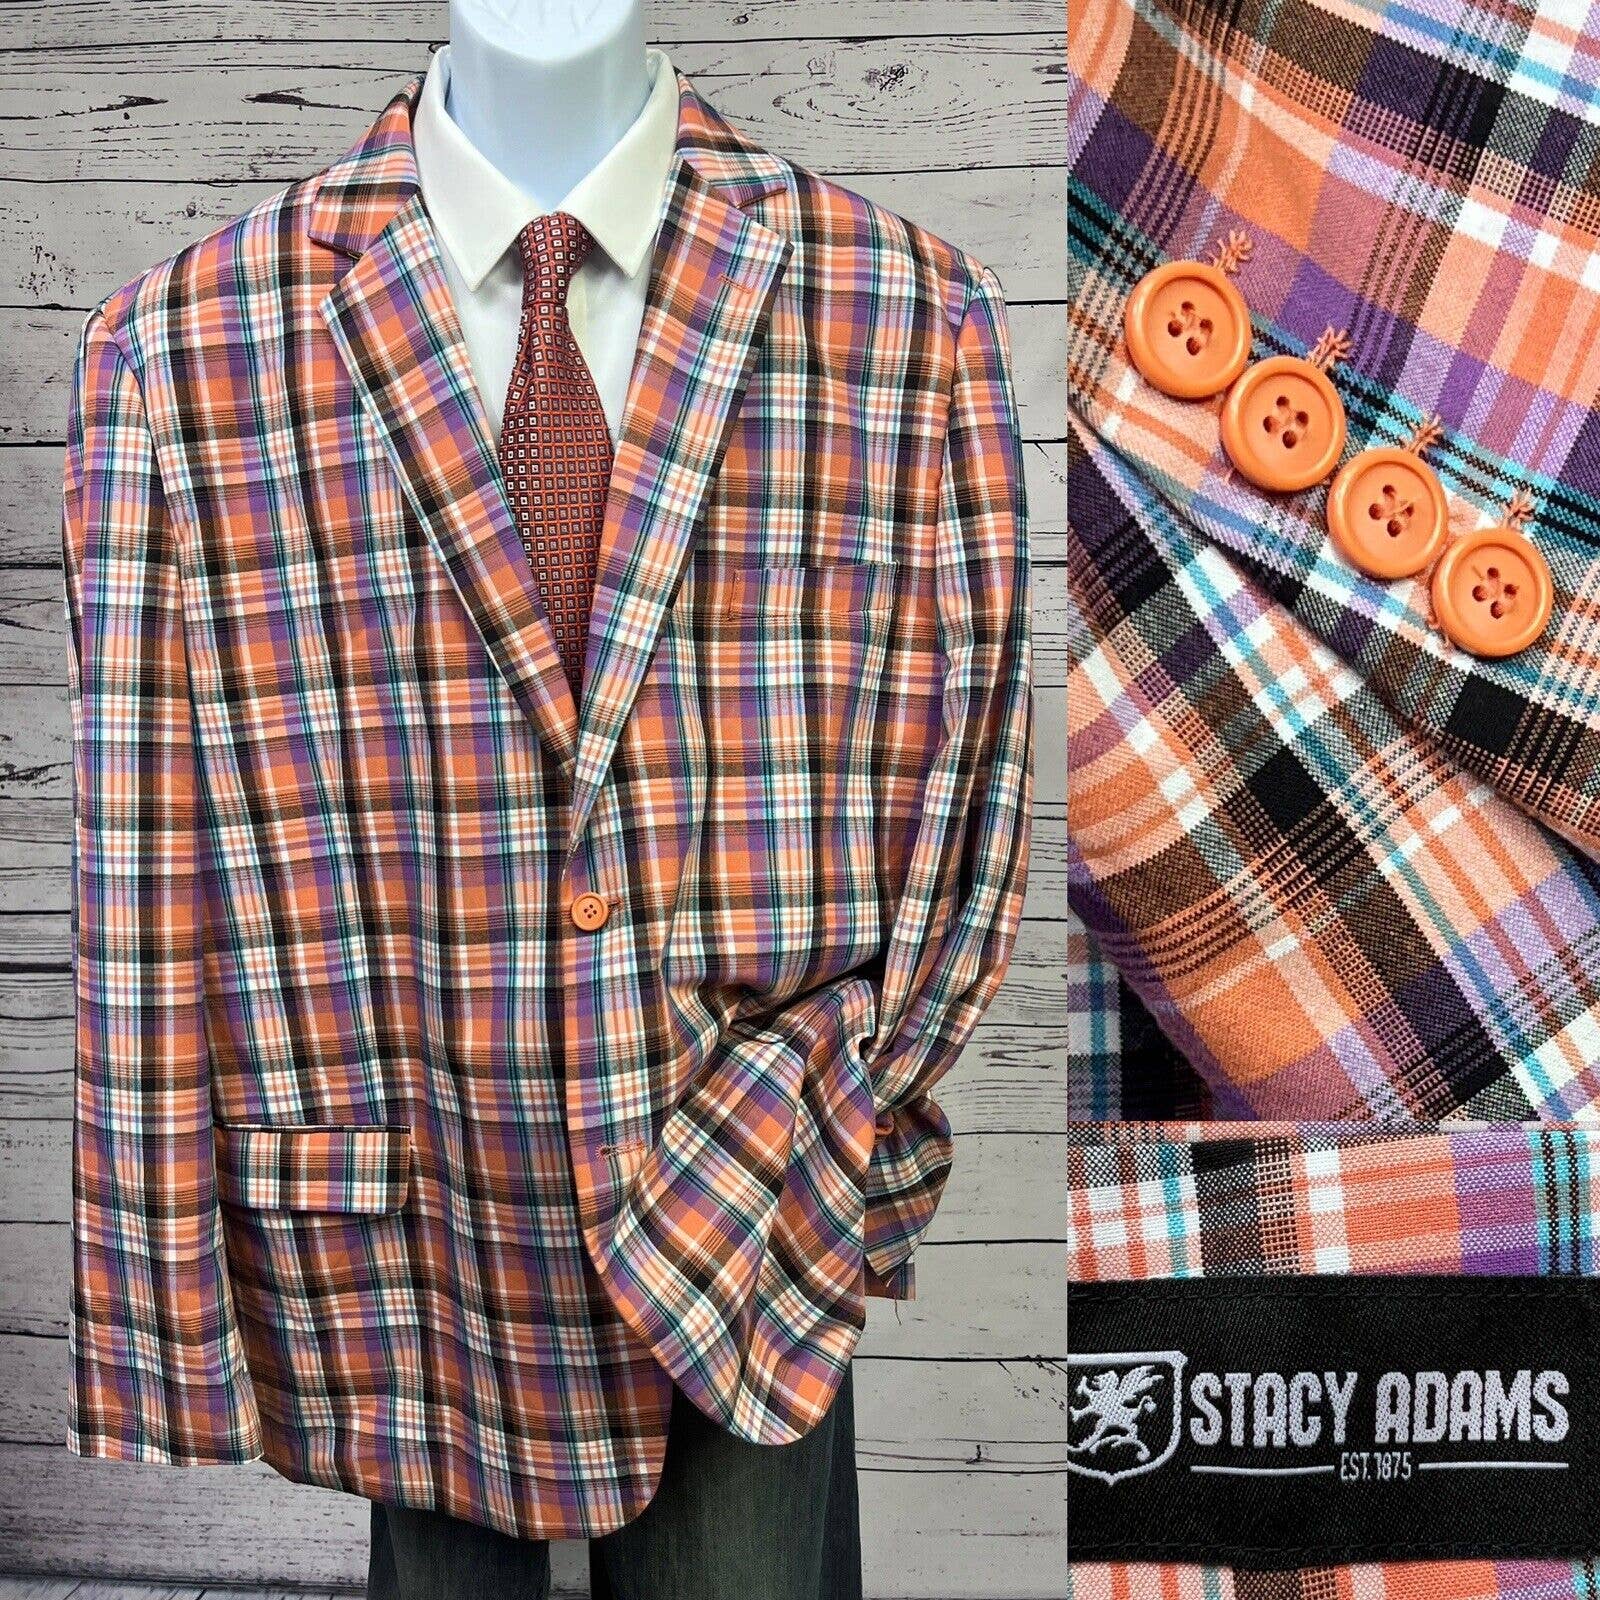 Stacy Adams 2 Button Sport Jacket Mens 52R Plaid Coat Orange And Purple